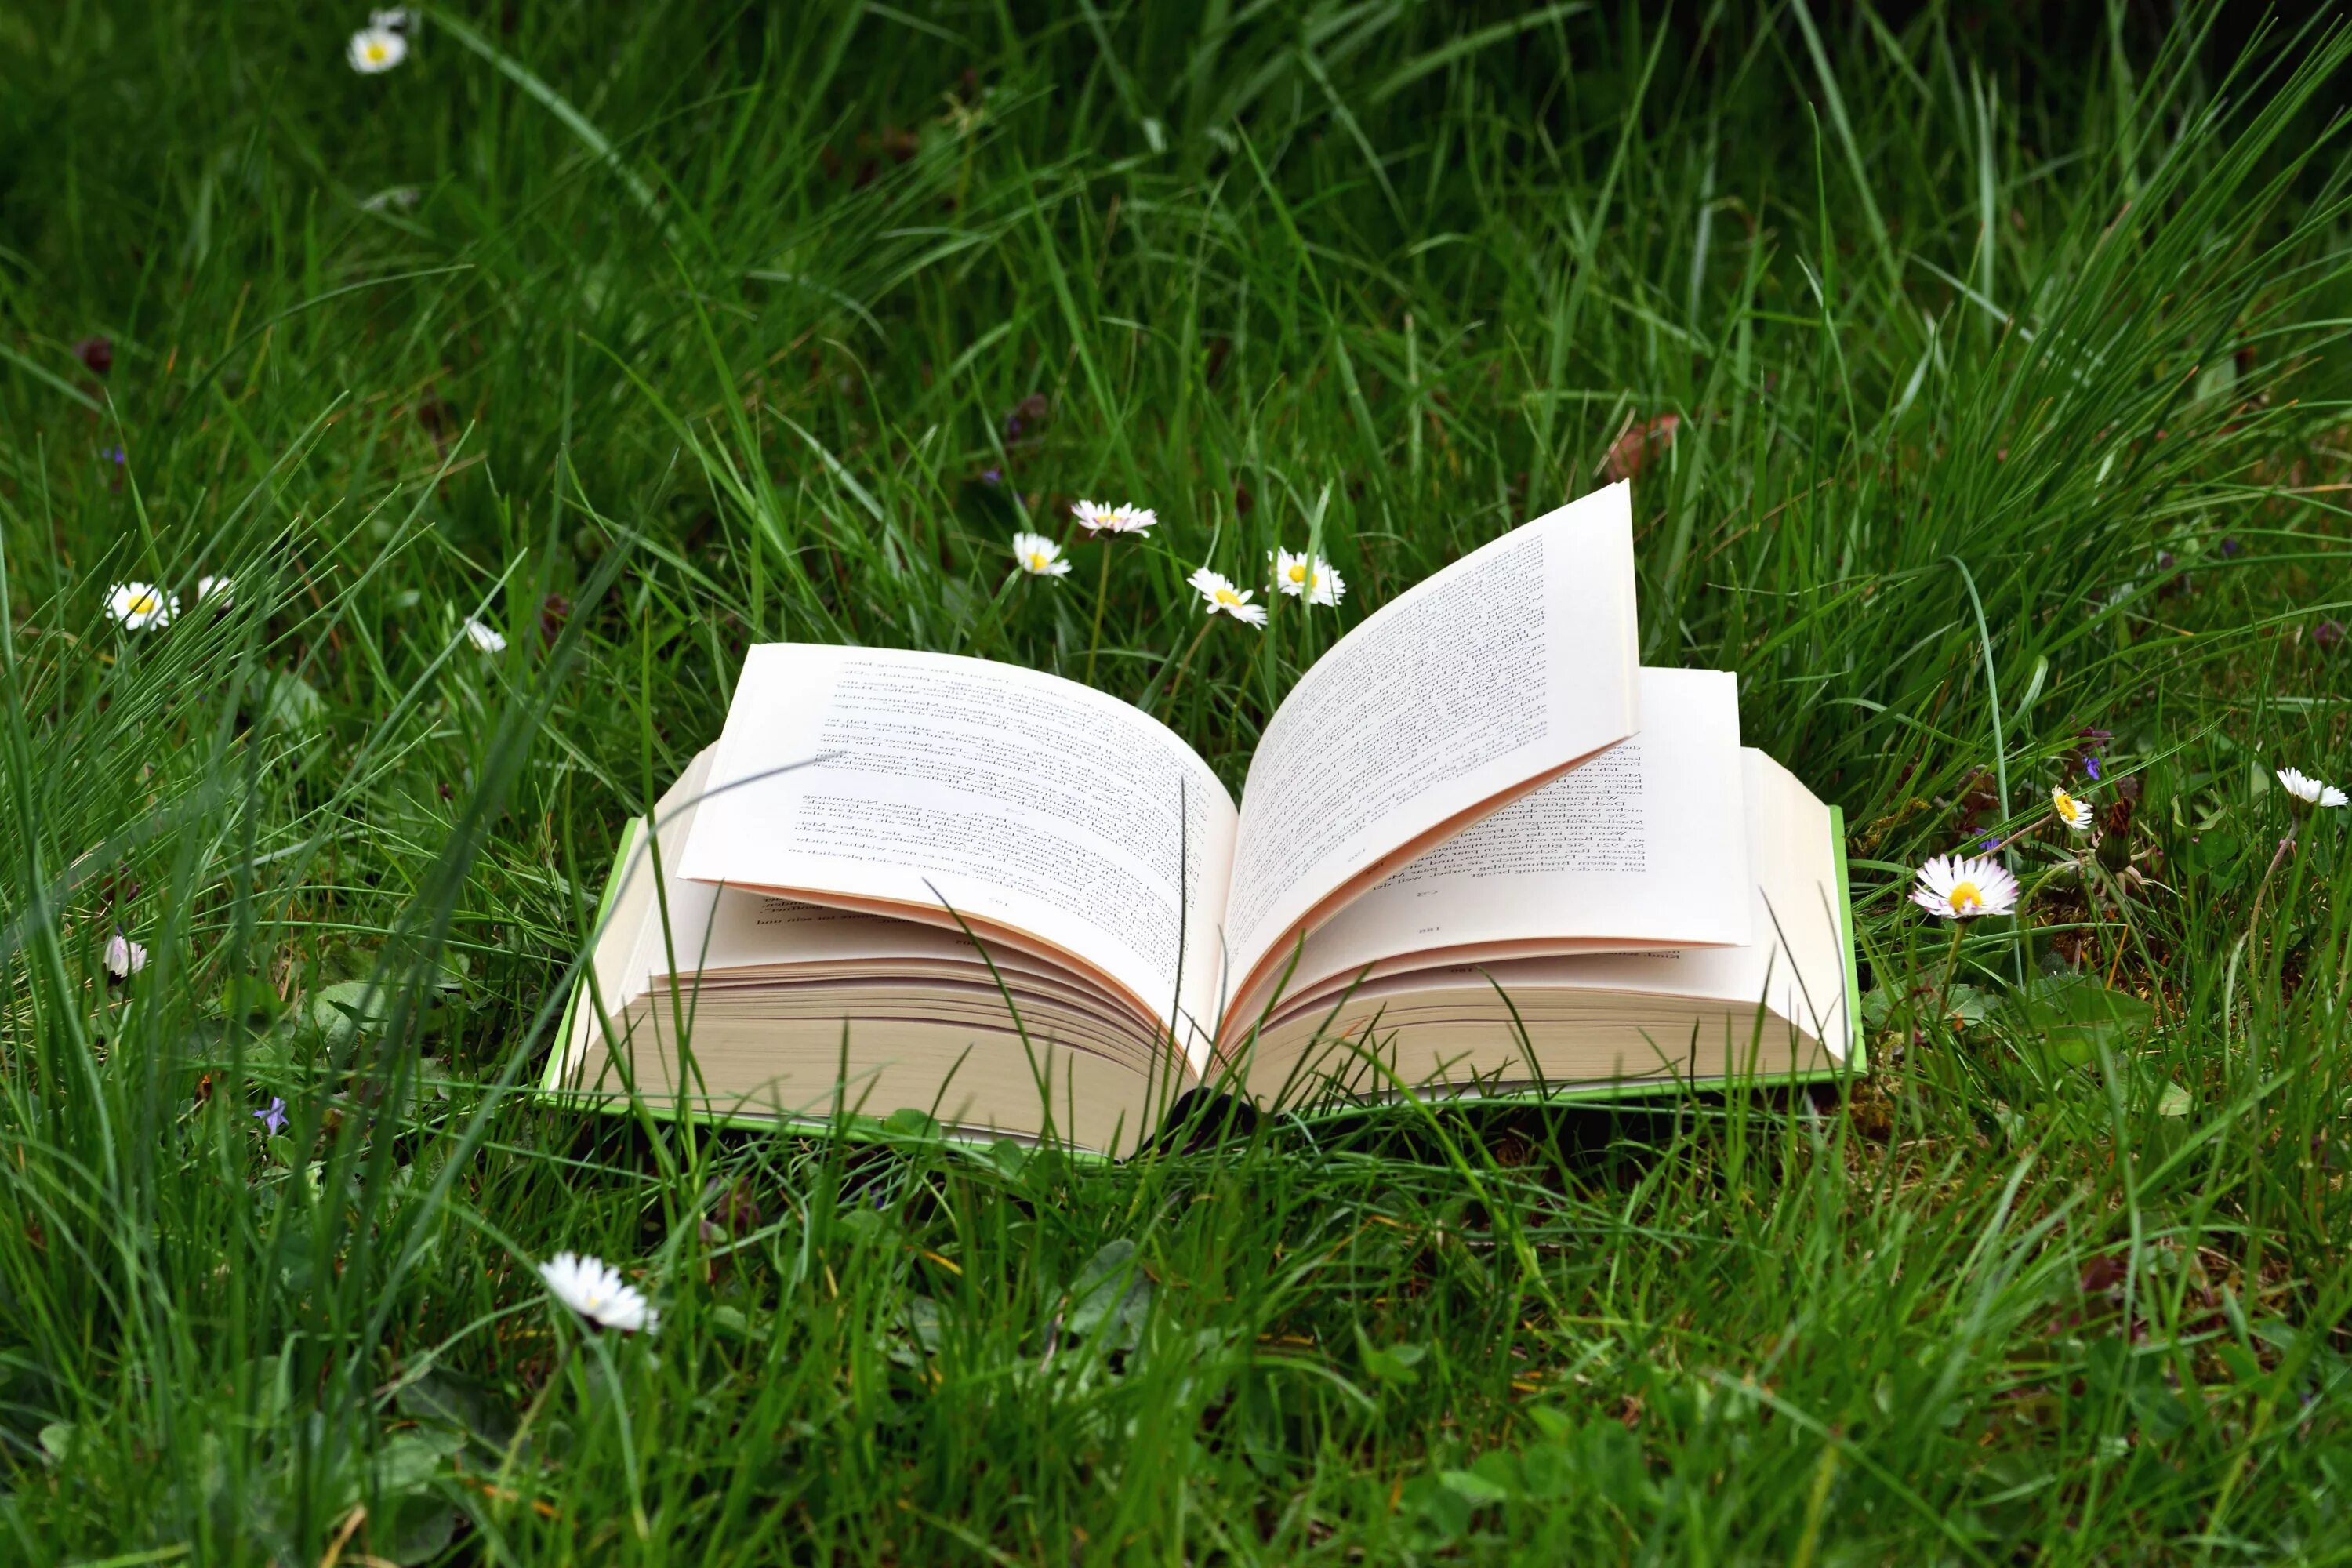 Картинка книги. Раскрытая книга. Книга на траве. Лето с книгой. Книга природа.